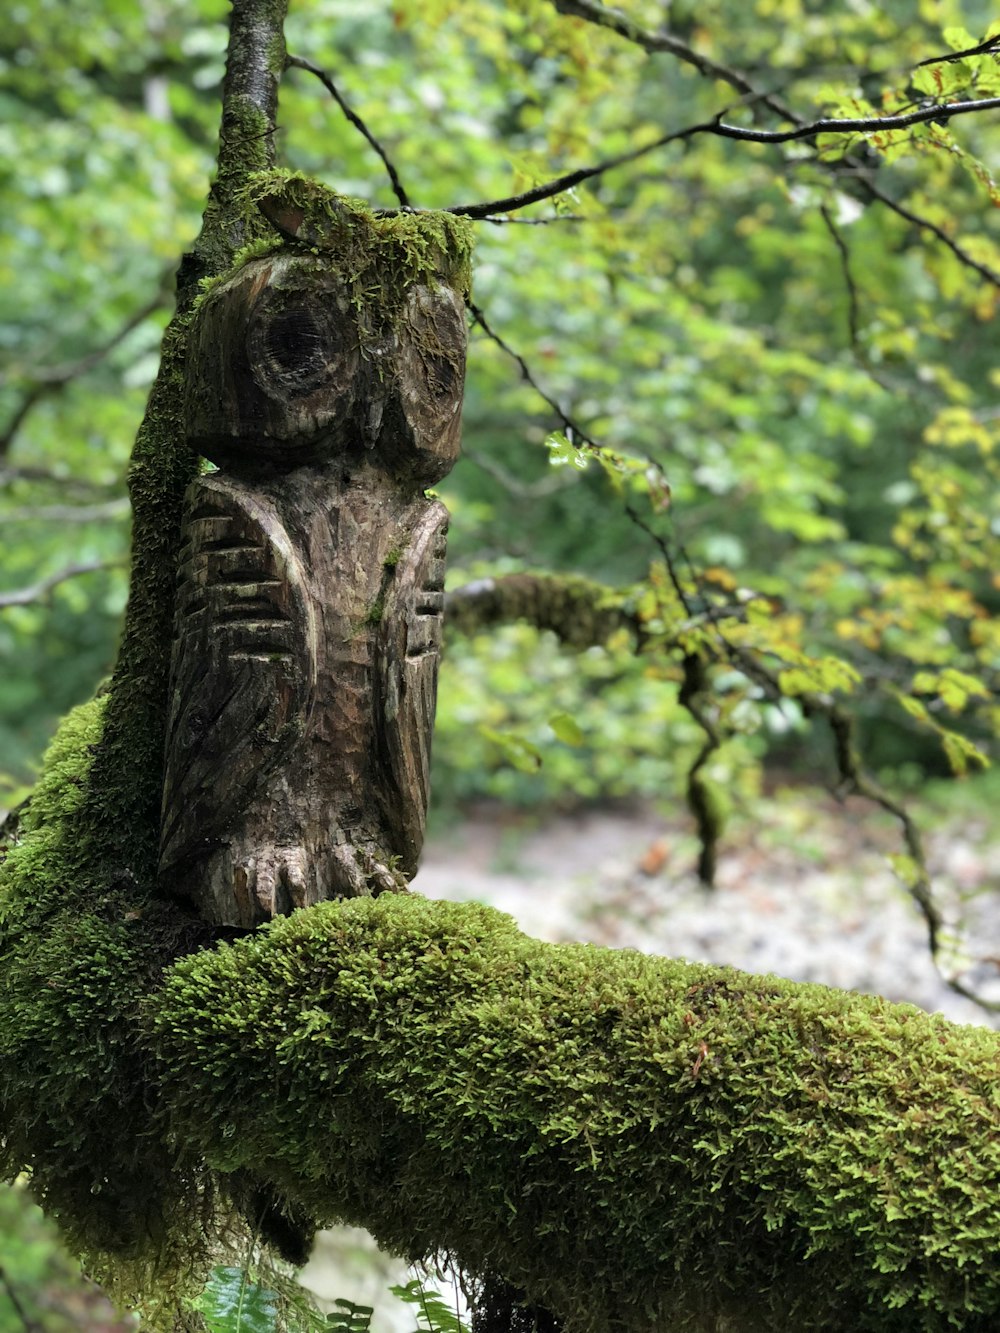 owl wooden sculpture on tree branch